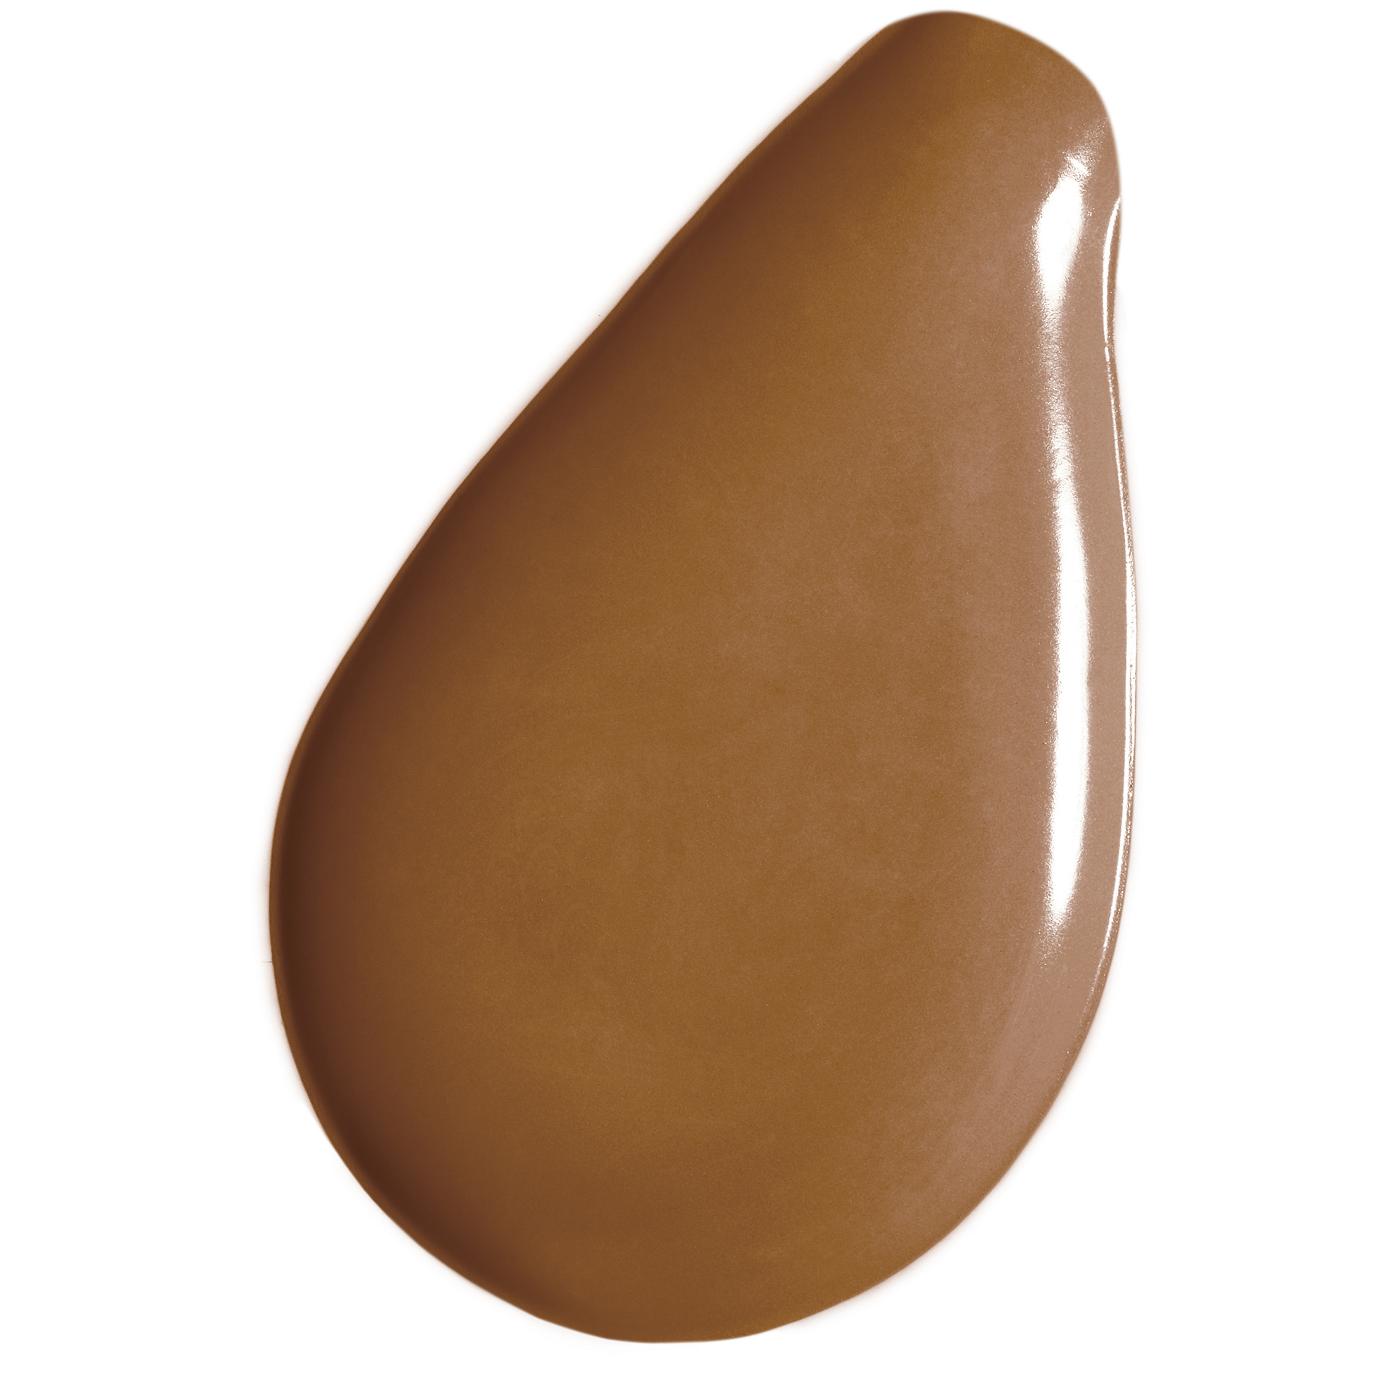 L'Oréal Paris True Match Lumi Healthy Luminous Makeup Medium Coverage C7-8 Nut Brown/Cocoa; image 2 of 2